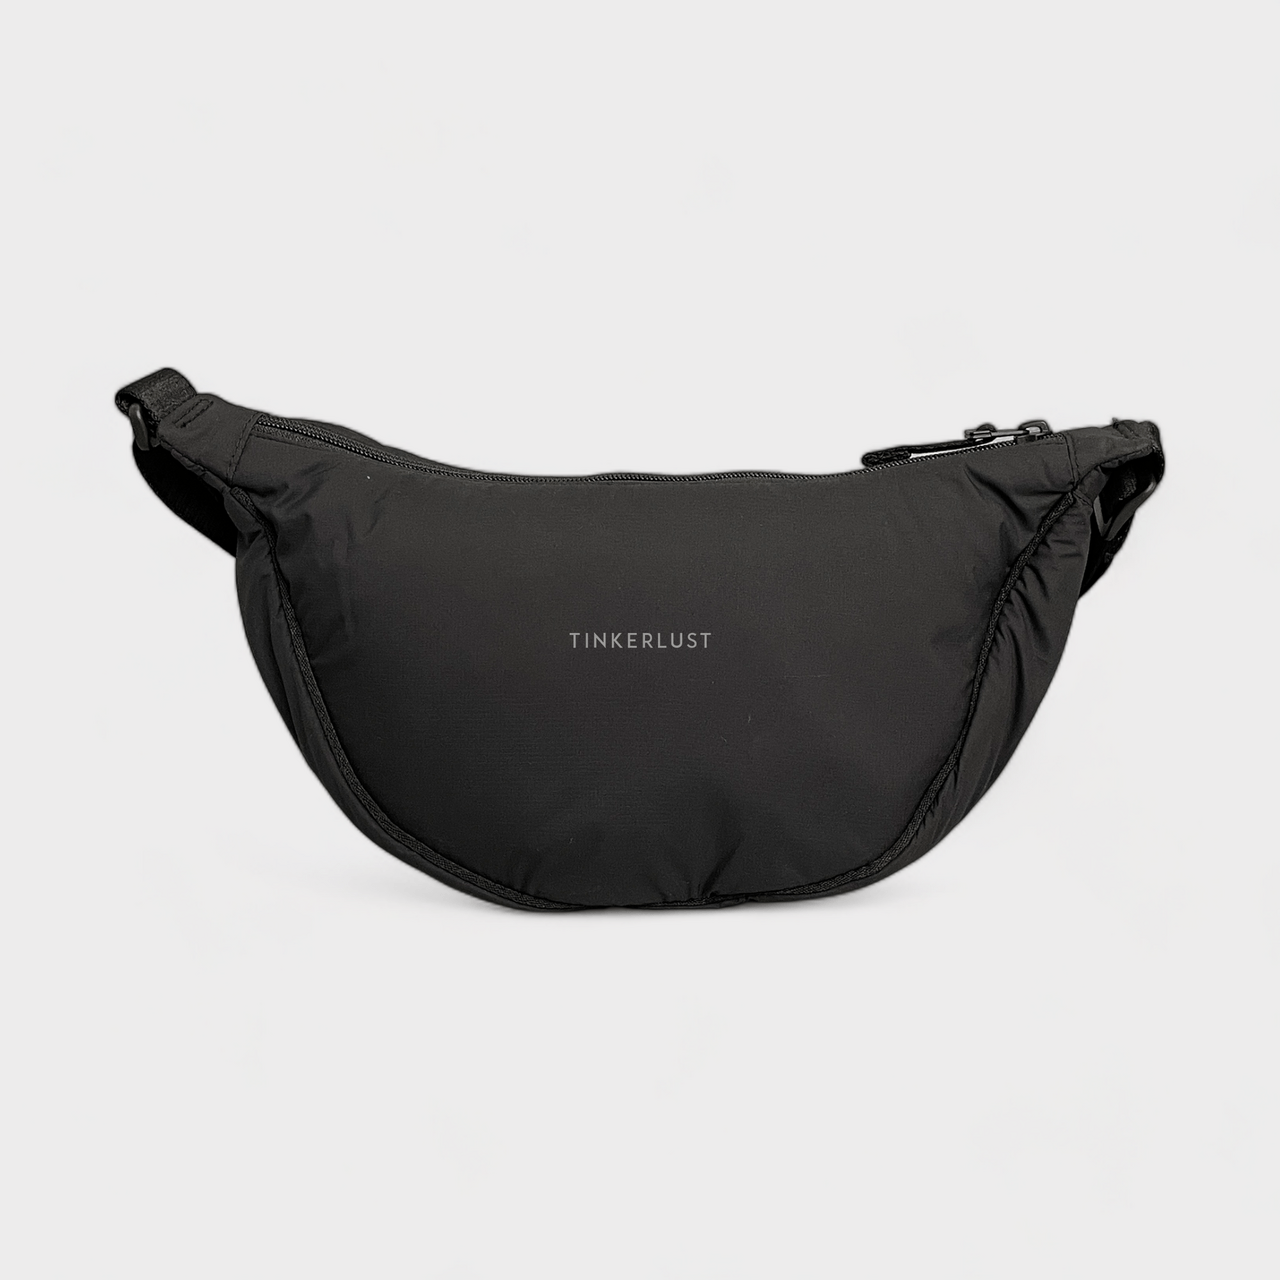 UNIQLO Black Sling Bag